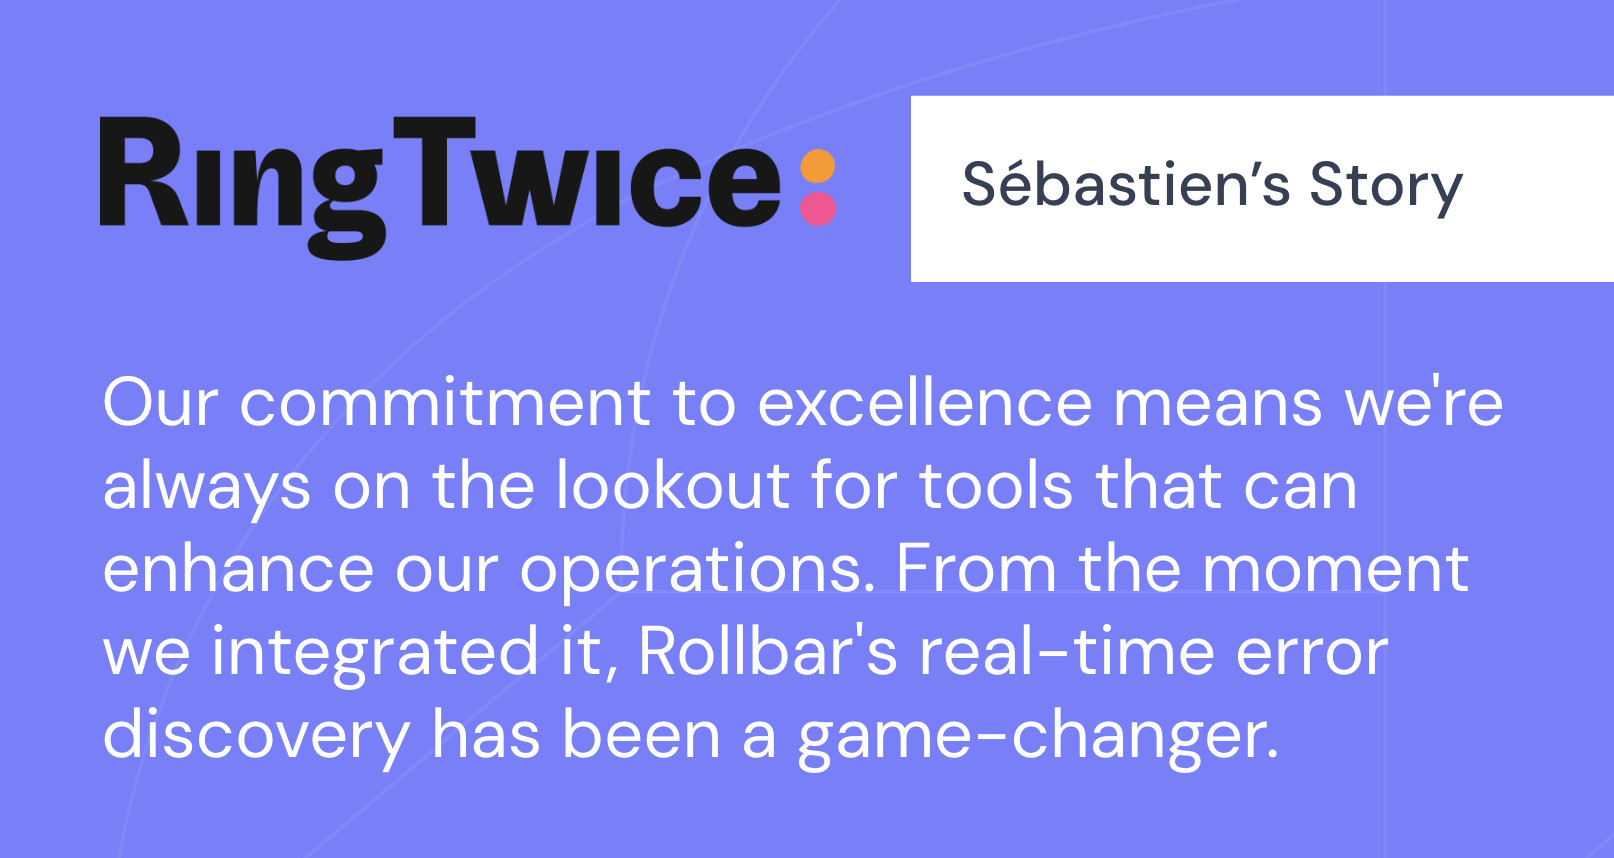 Sébastien’s story with Rollbar